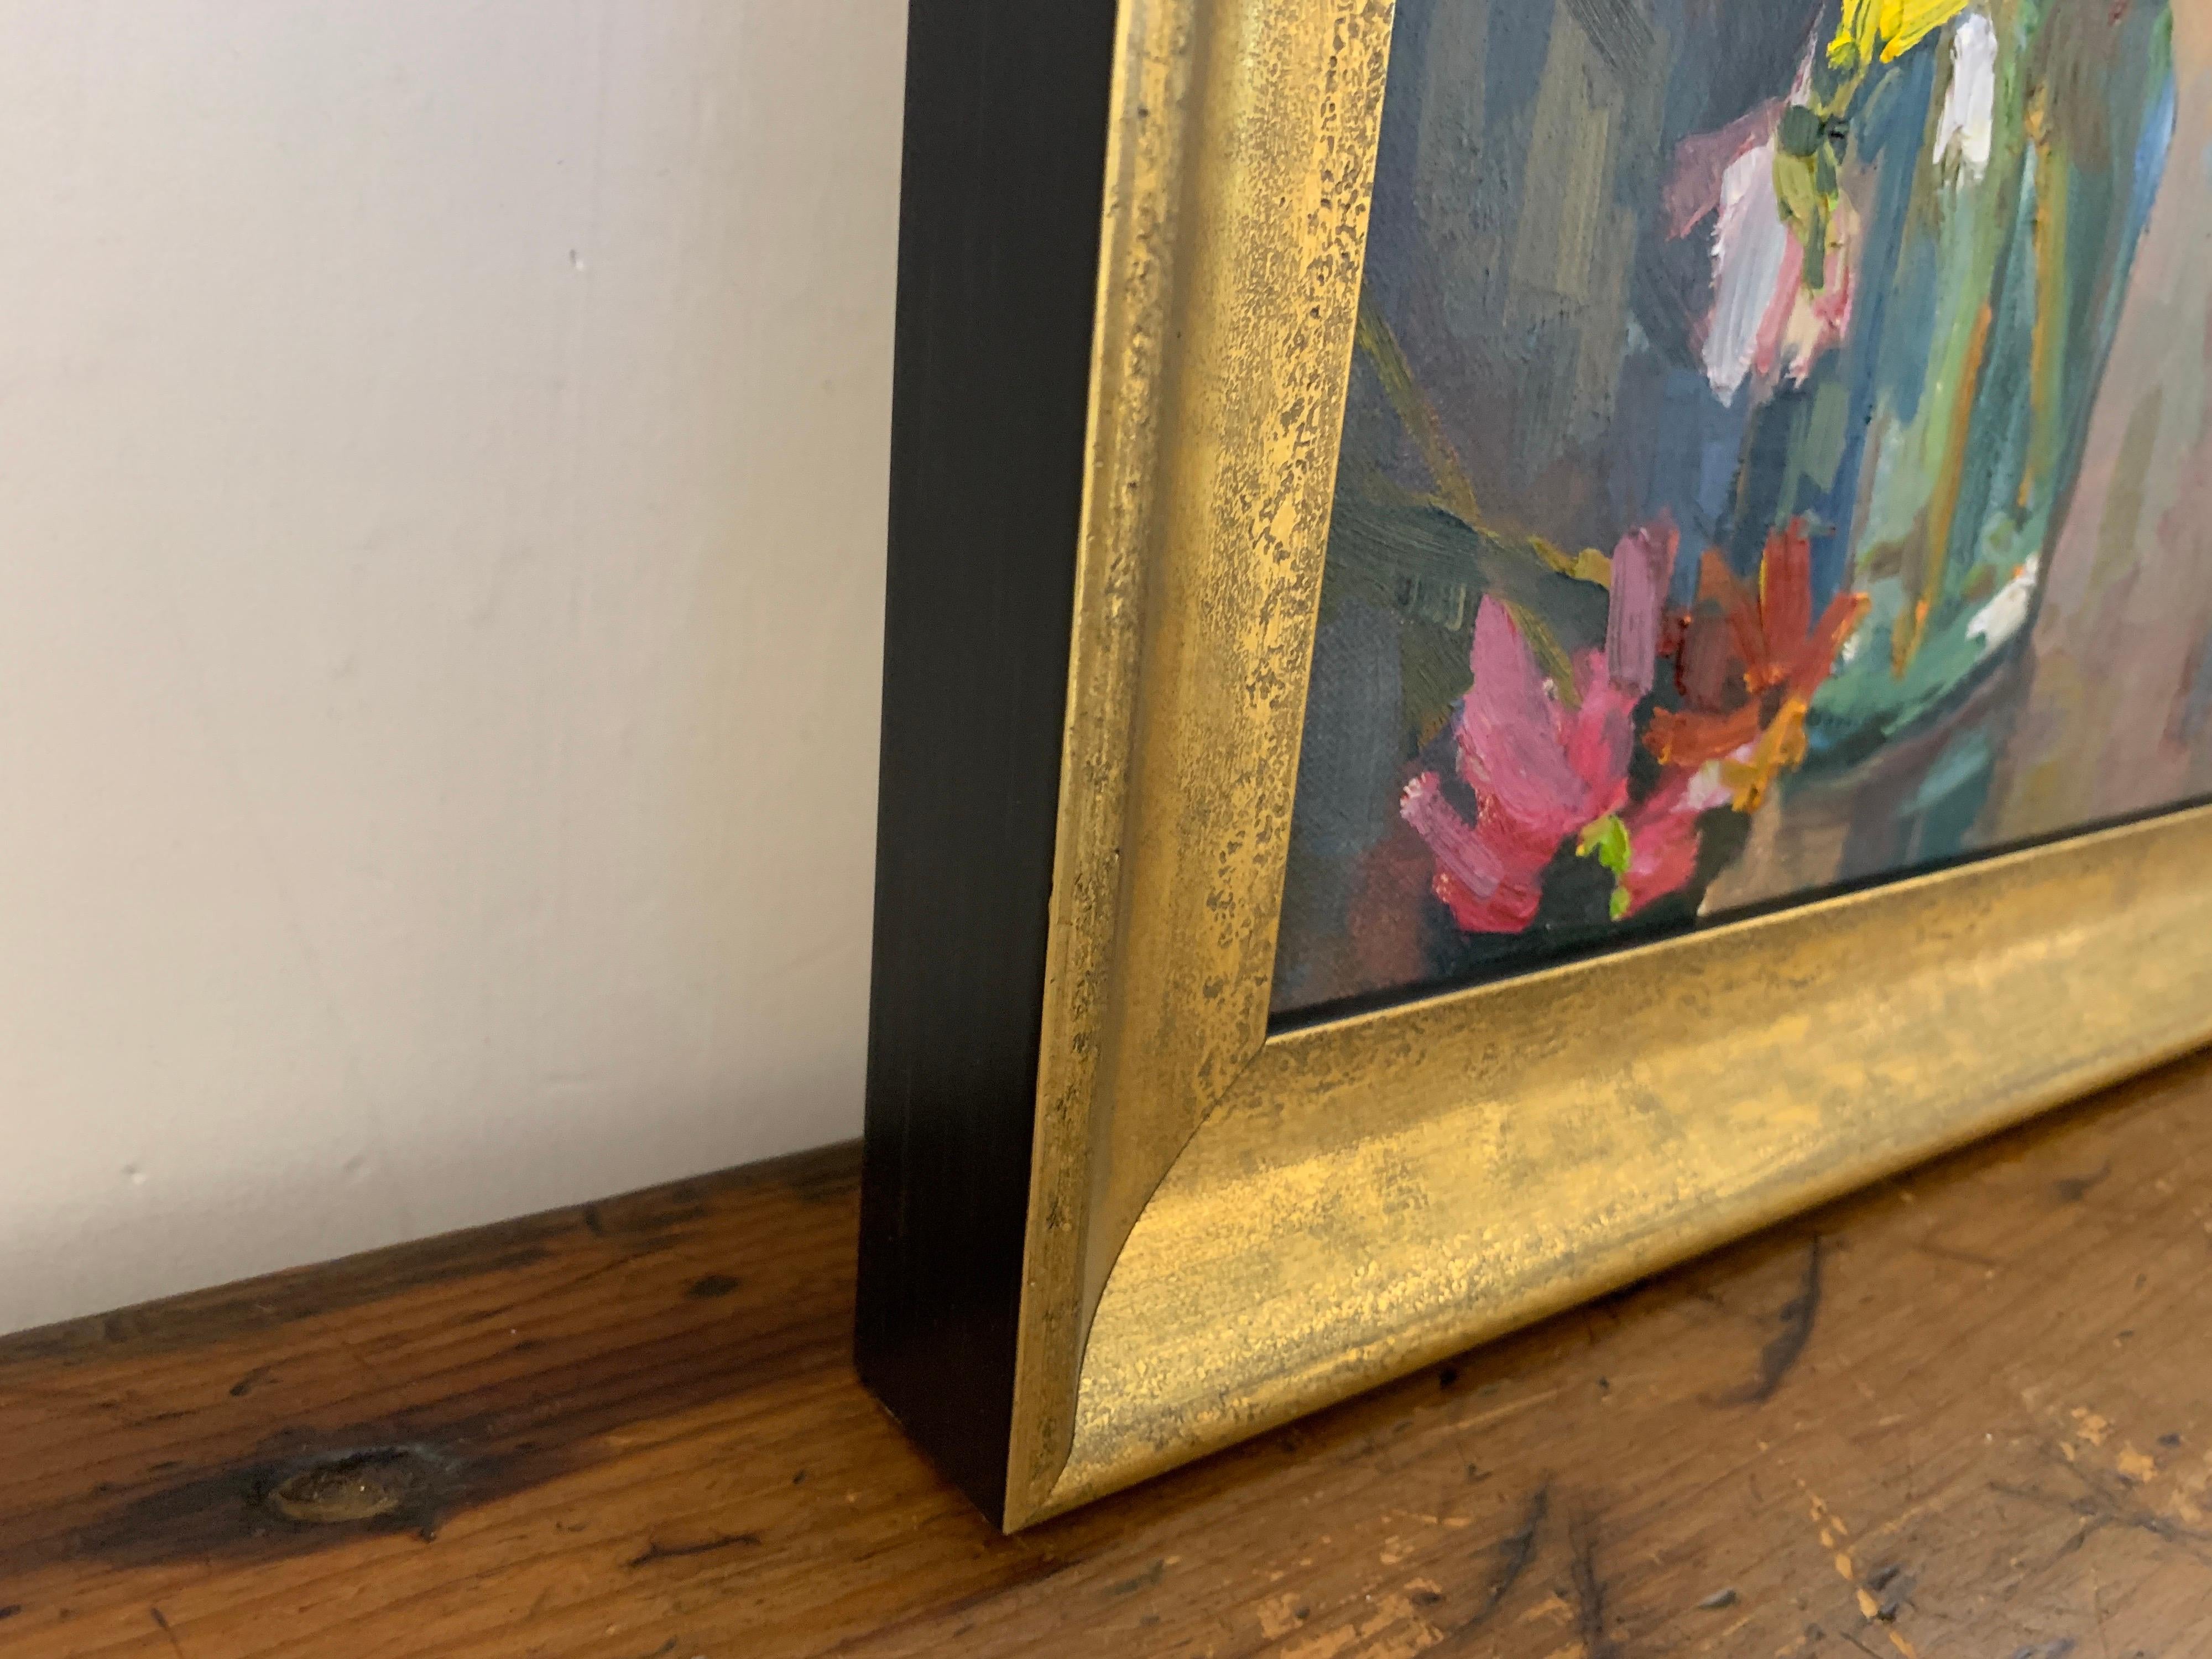 Fleurs II by Millie Gosch, Small Framed Oil on Board Still-Life Painting 2